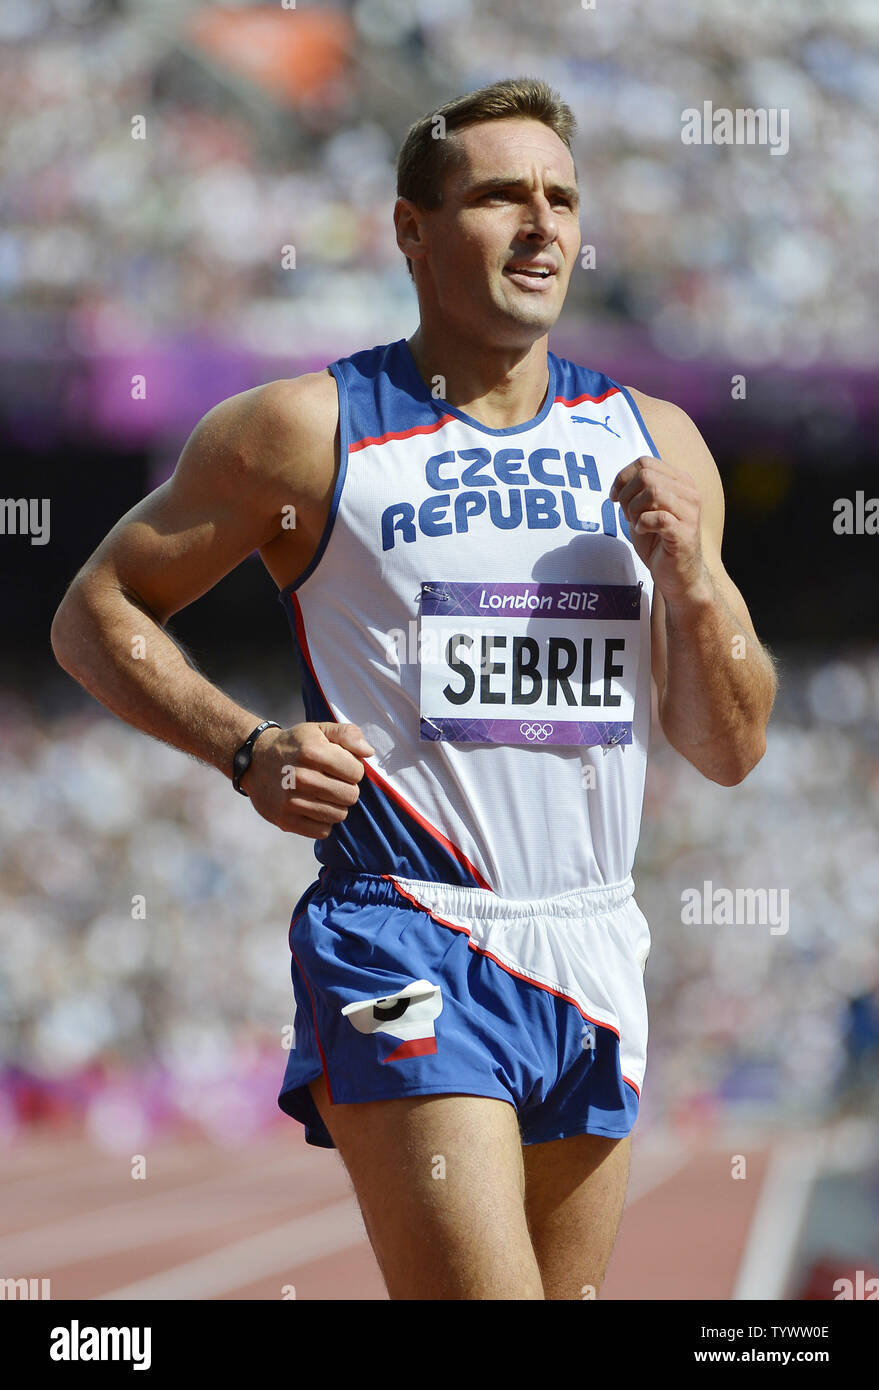 Czech Republic finishes the 100M 